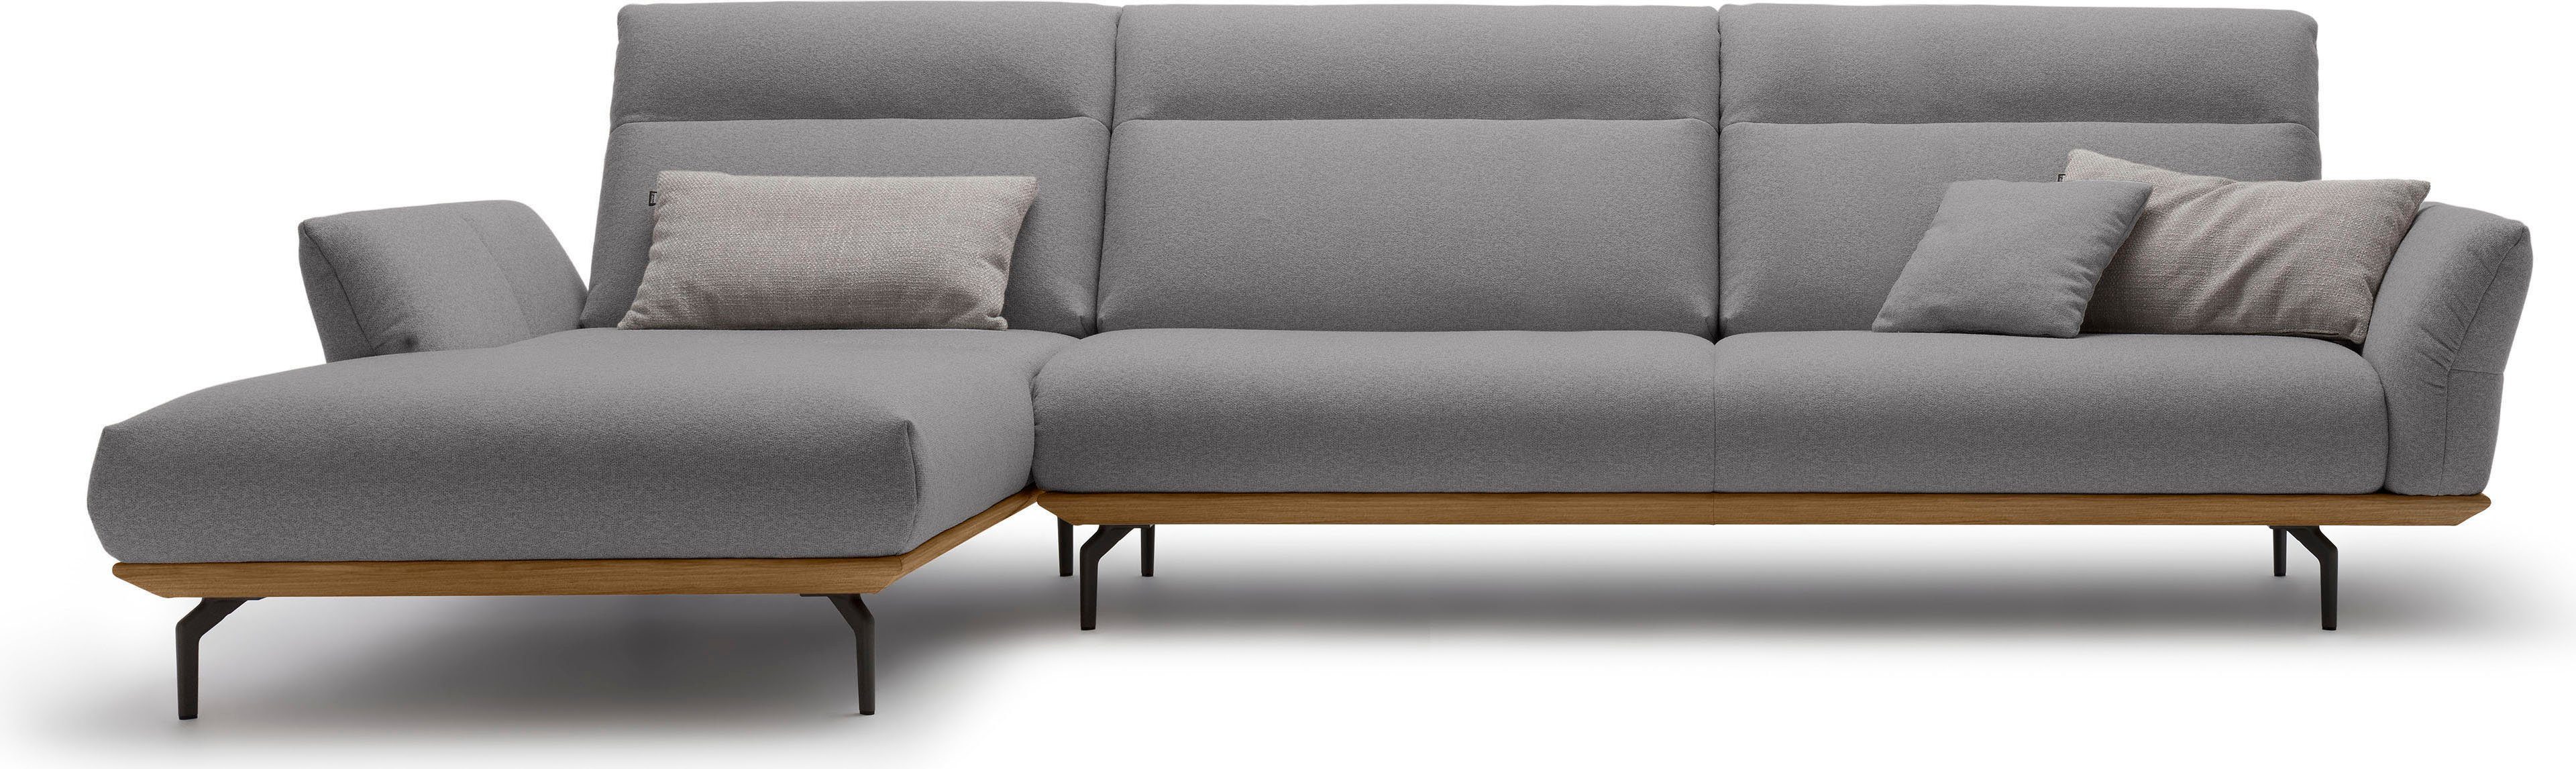 sofa cm 338 Sockel hs.460, Ecksofa hülsta in in Breite Winkelfüße Umbragrau, Nussbaum,